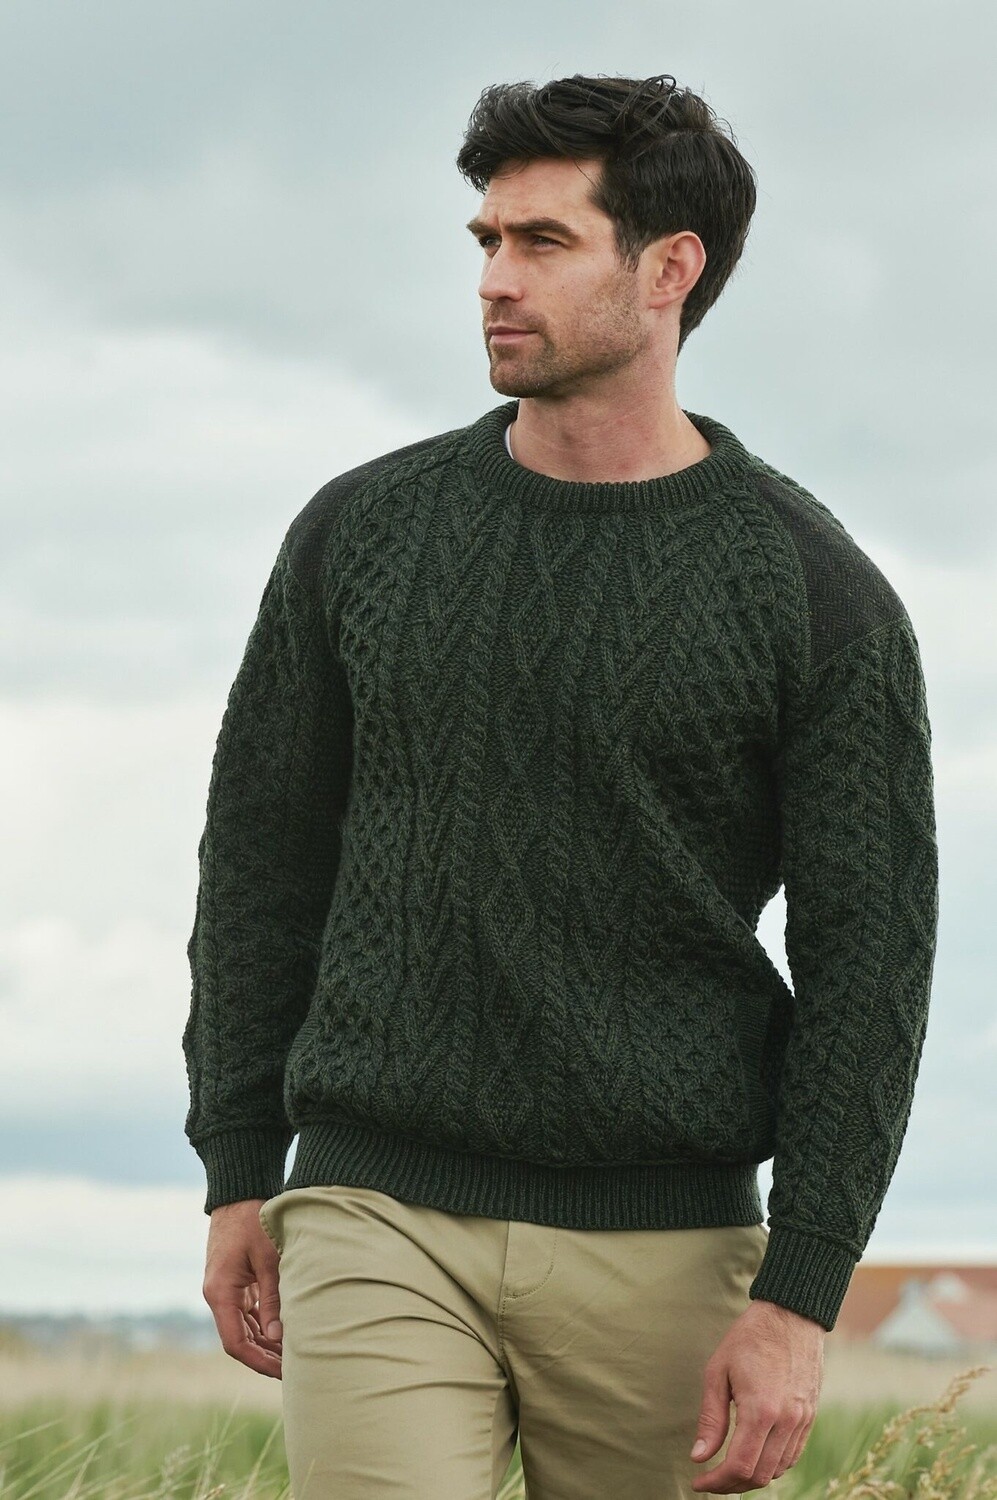 Sligo Crew Neck Sweater with Tweed, Colour: Army Green, Size: Small